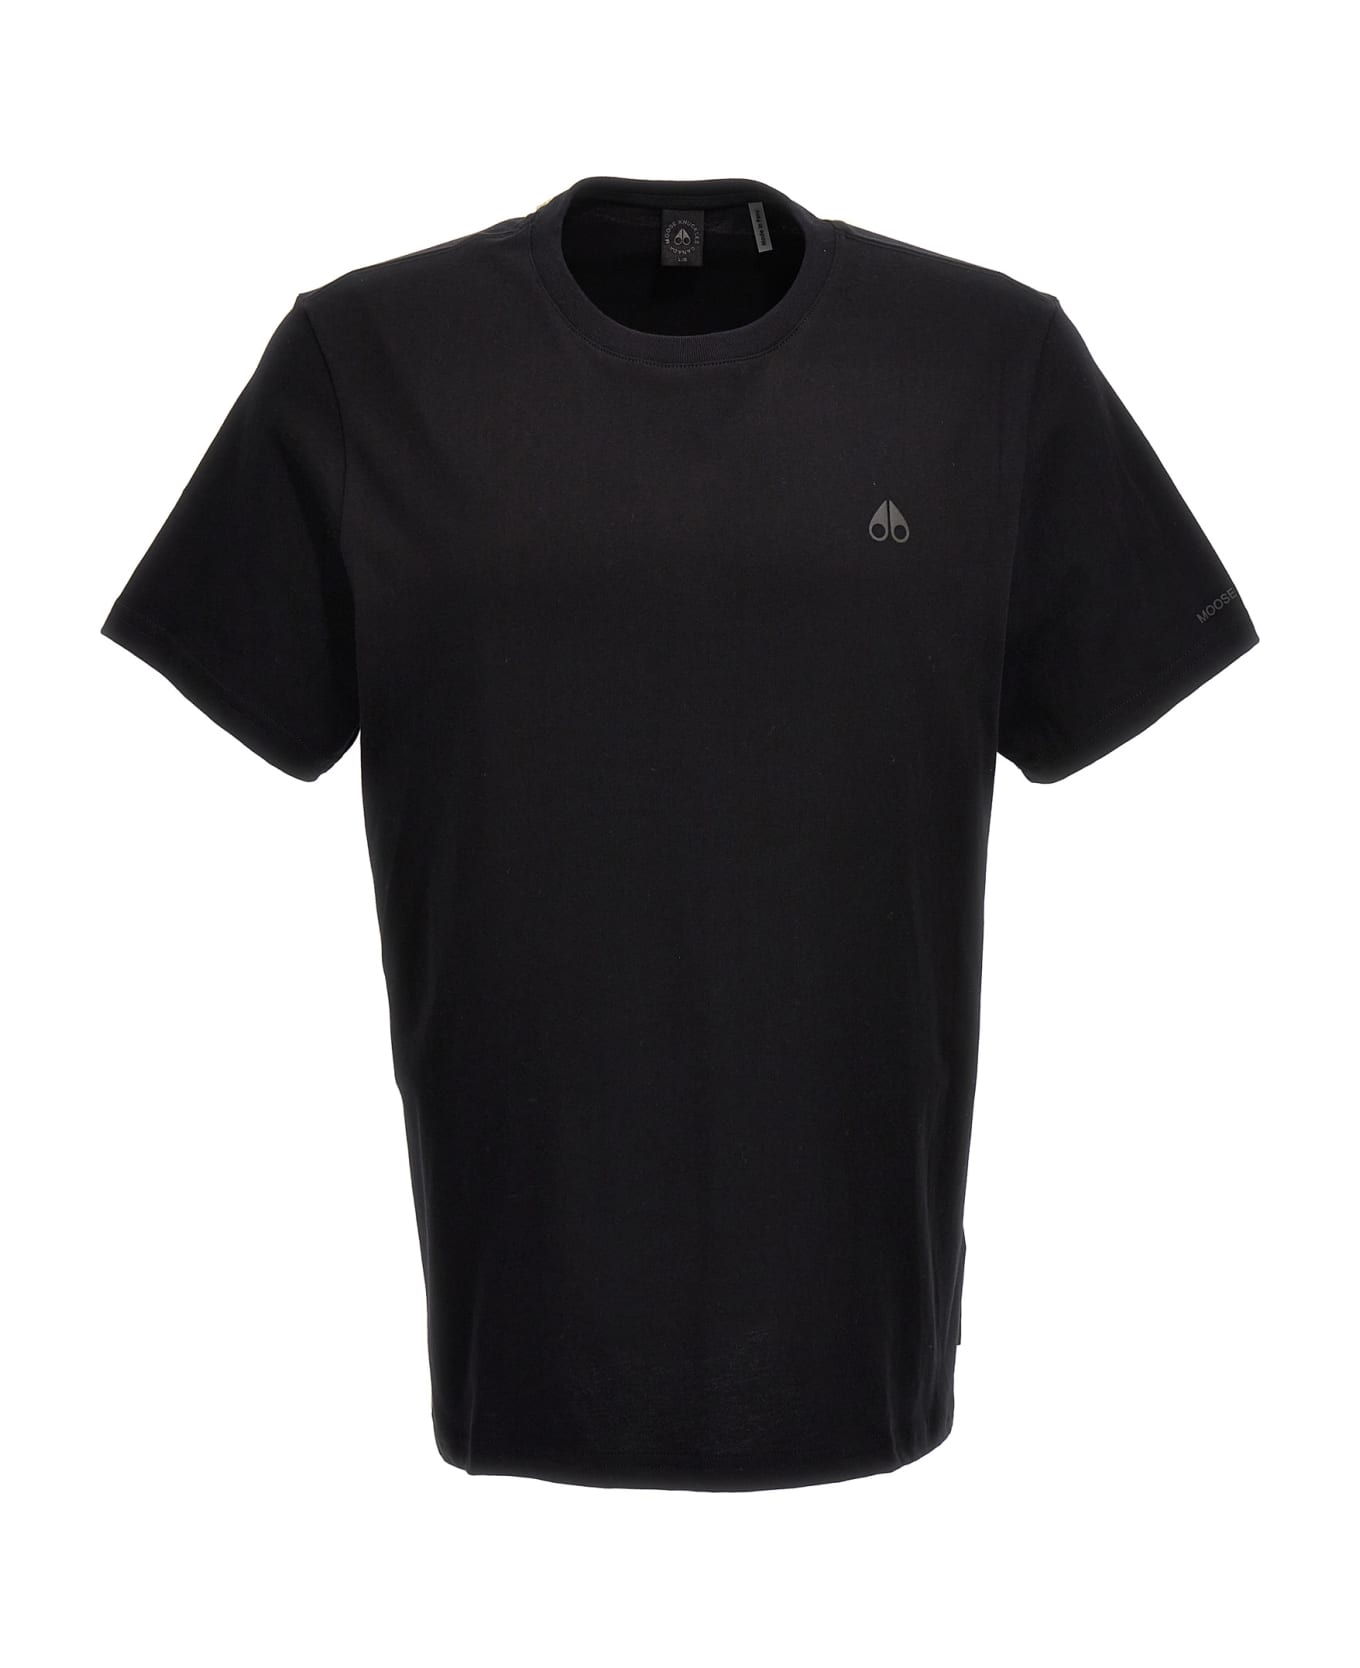 Moose Knuckles 'satellite' T-shirt - Black  